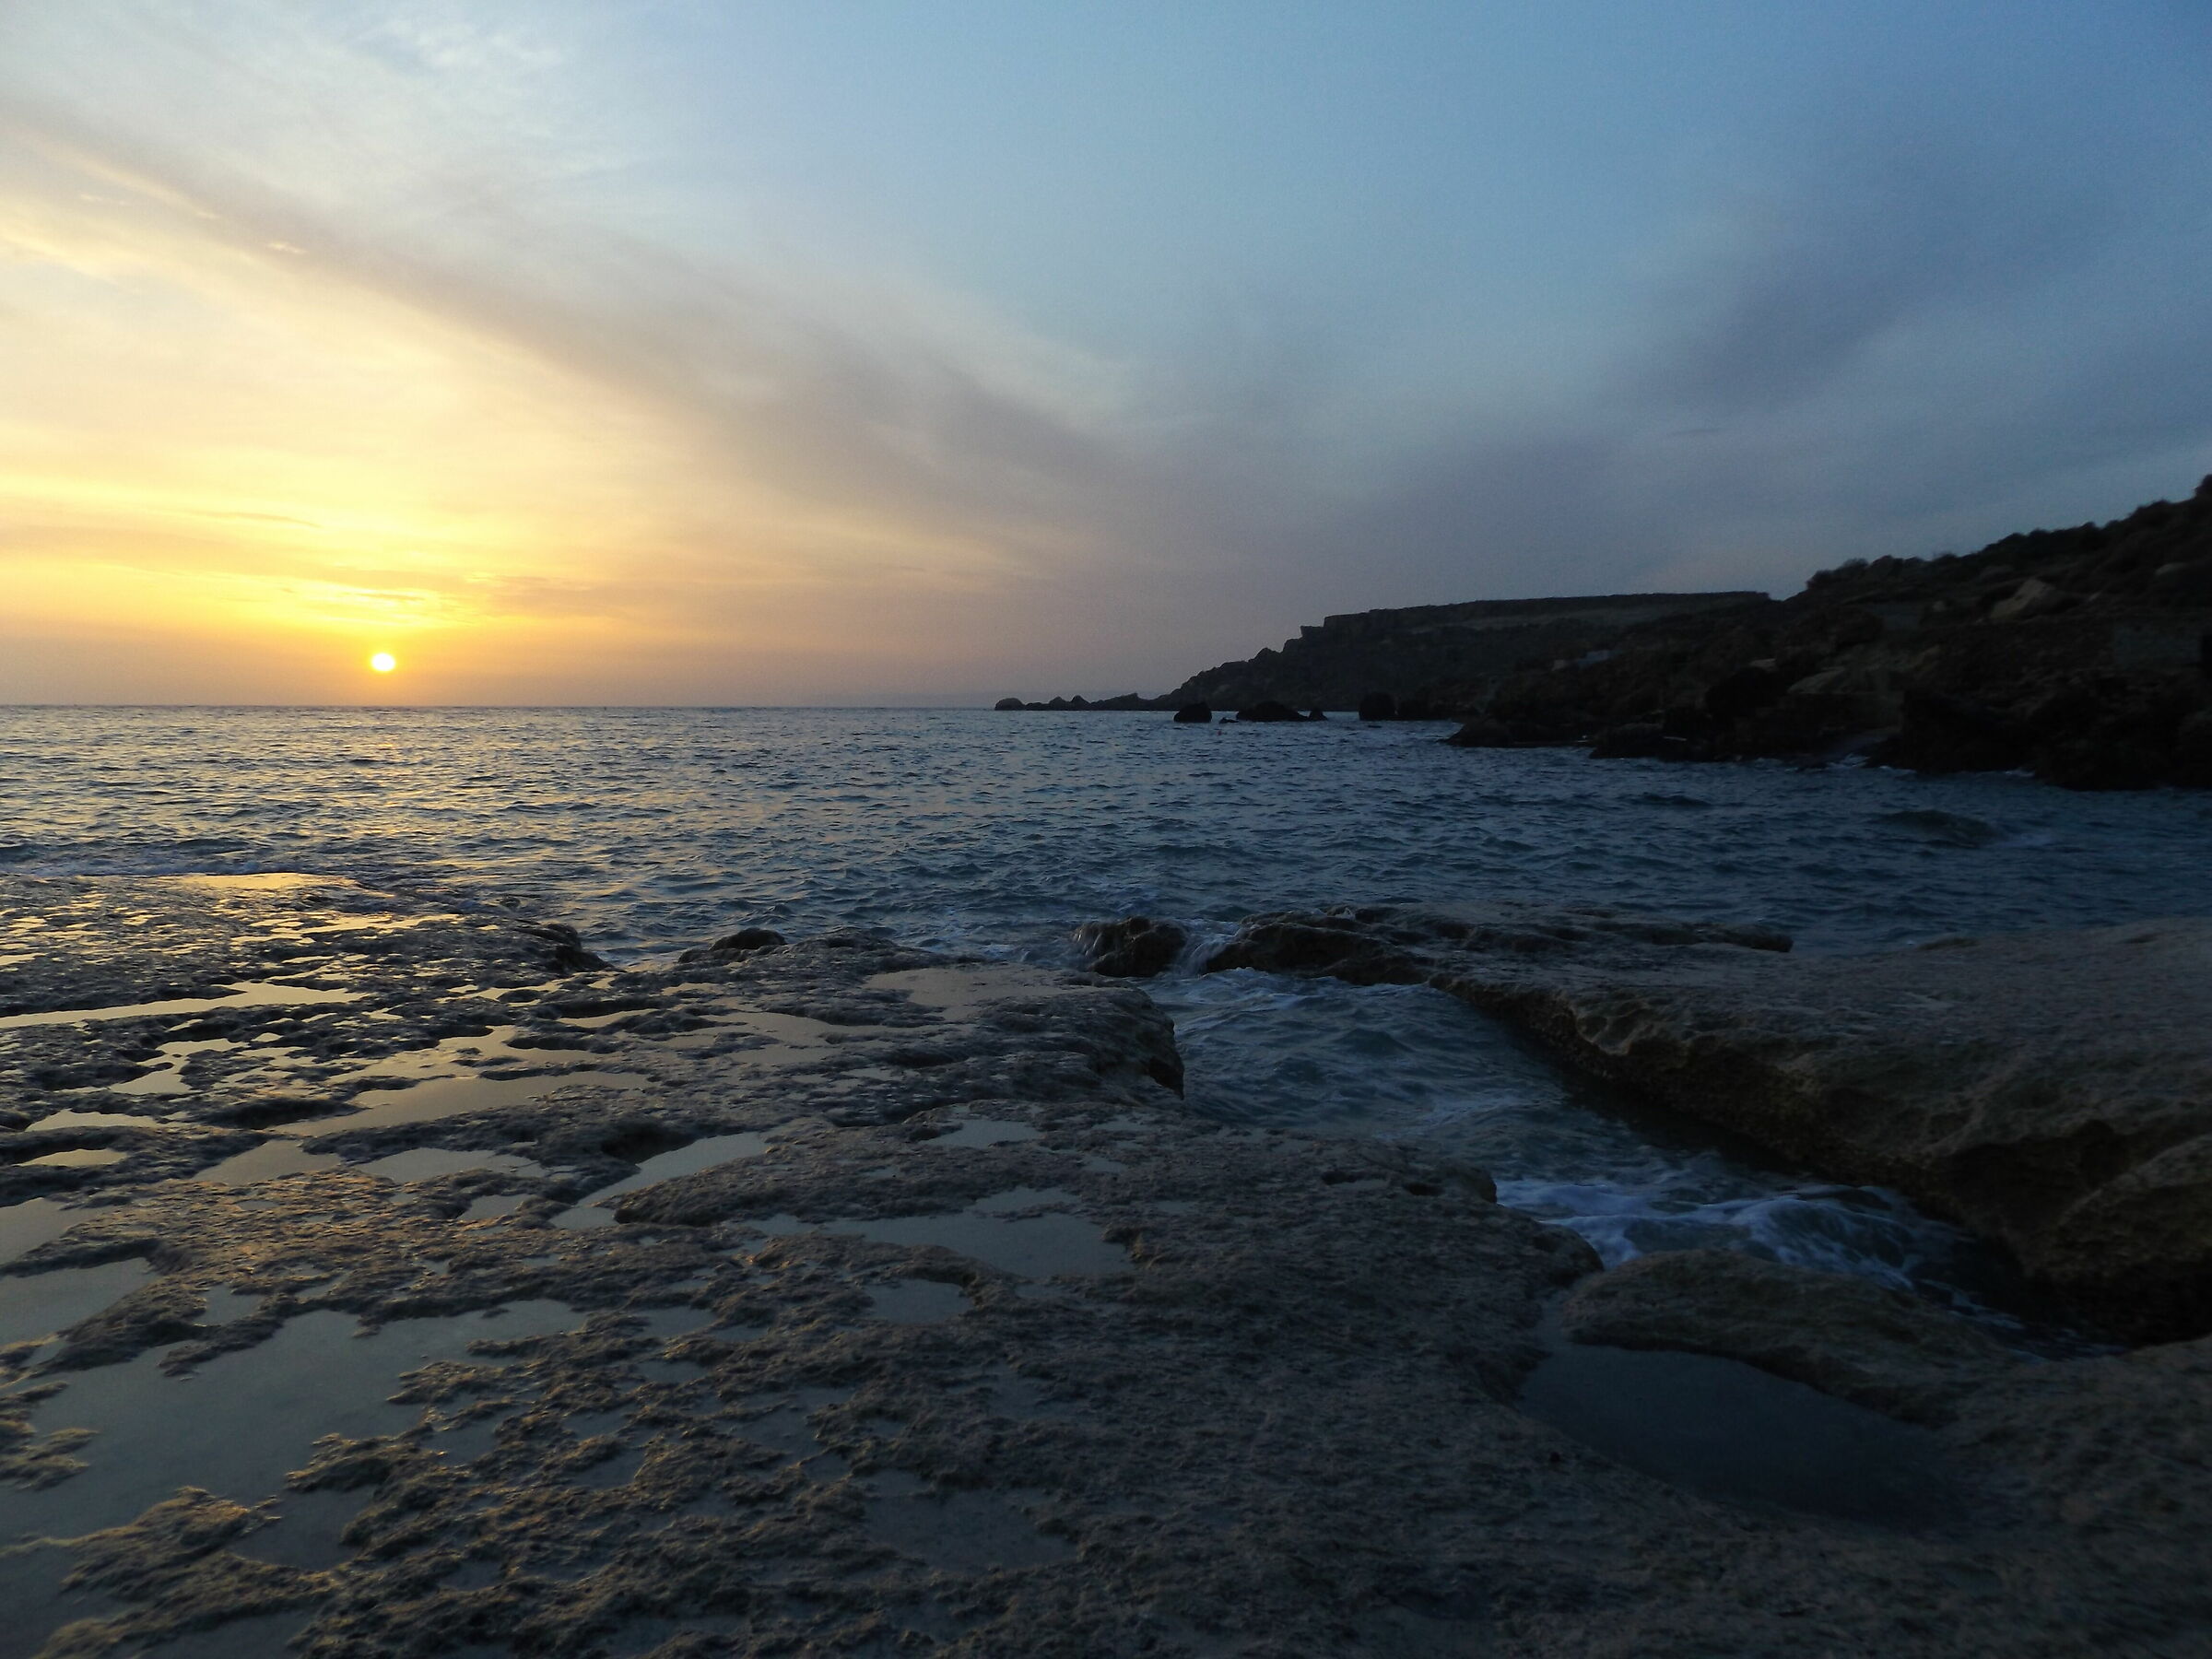 Sunset at G?ajn Tuffie?a, Malta...